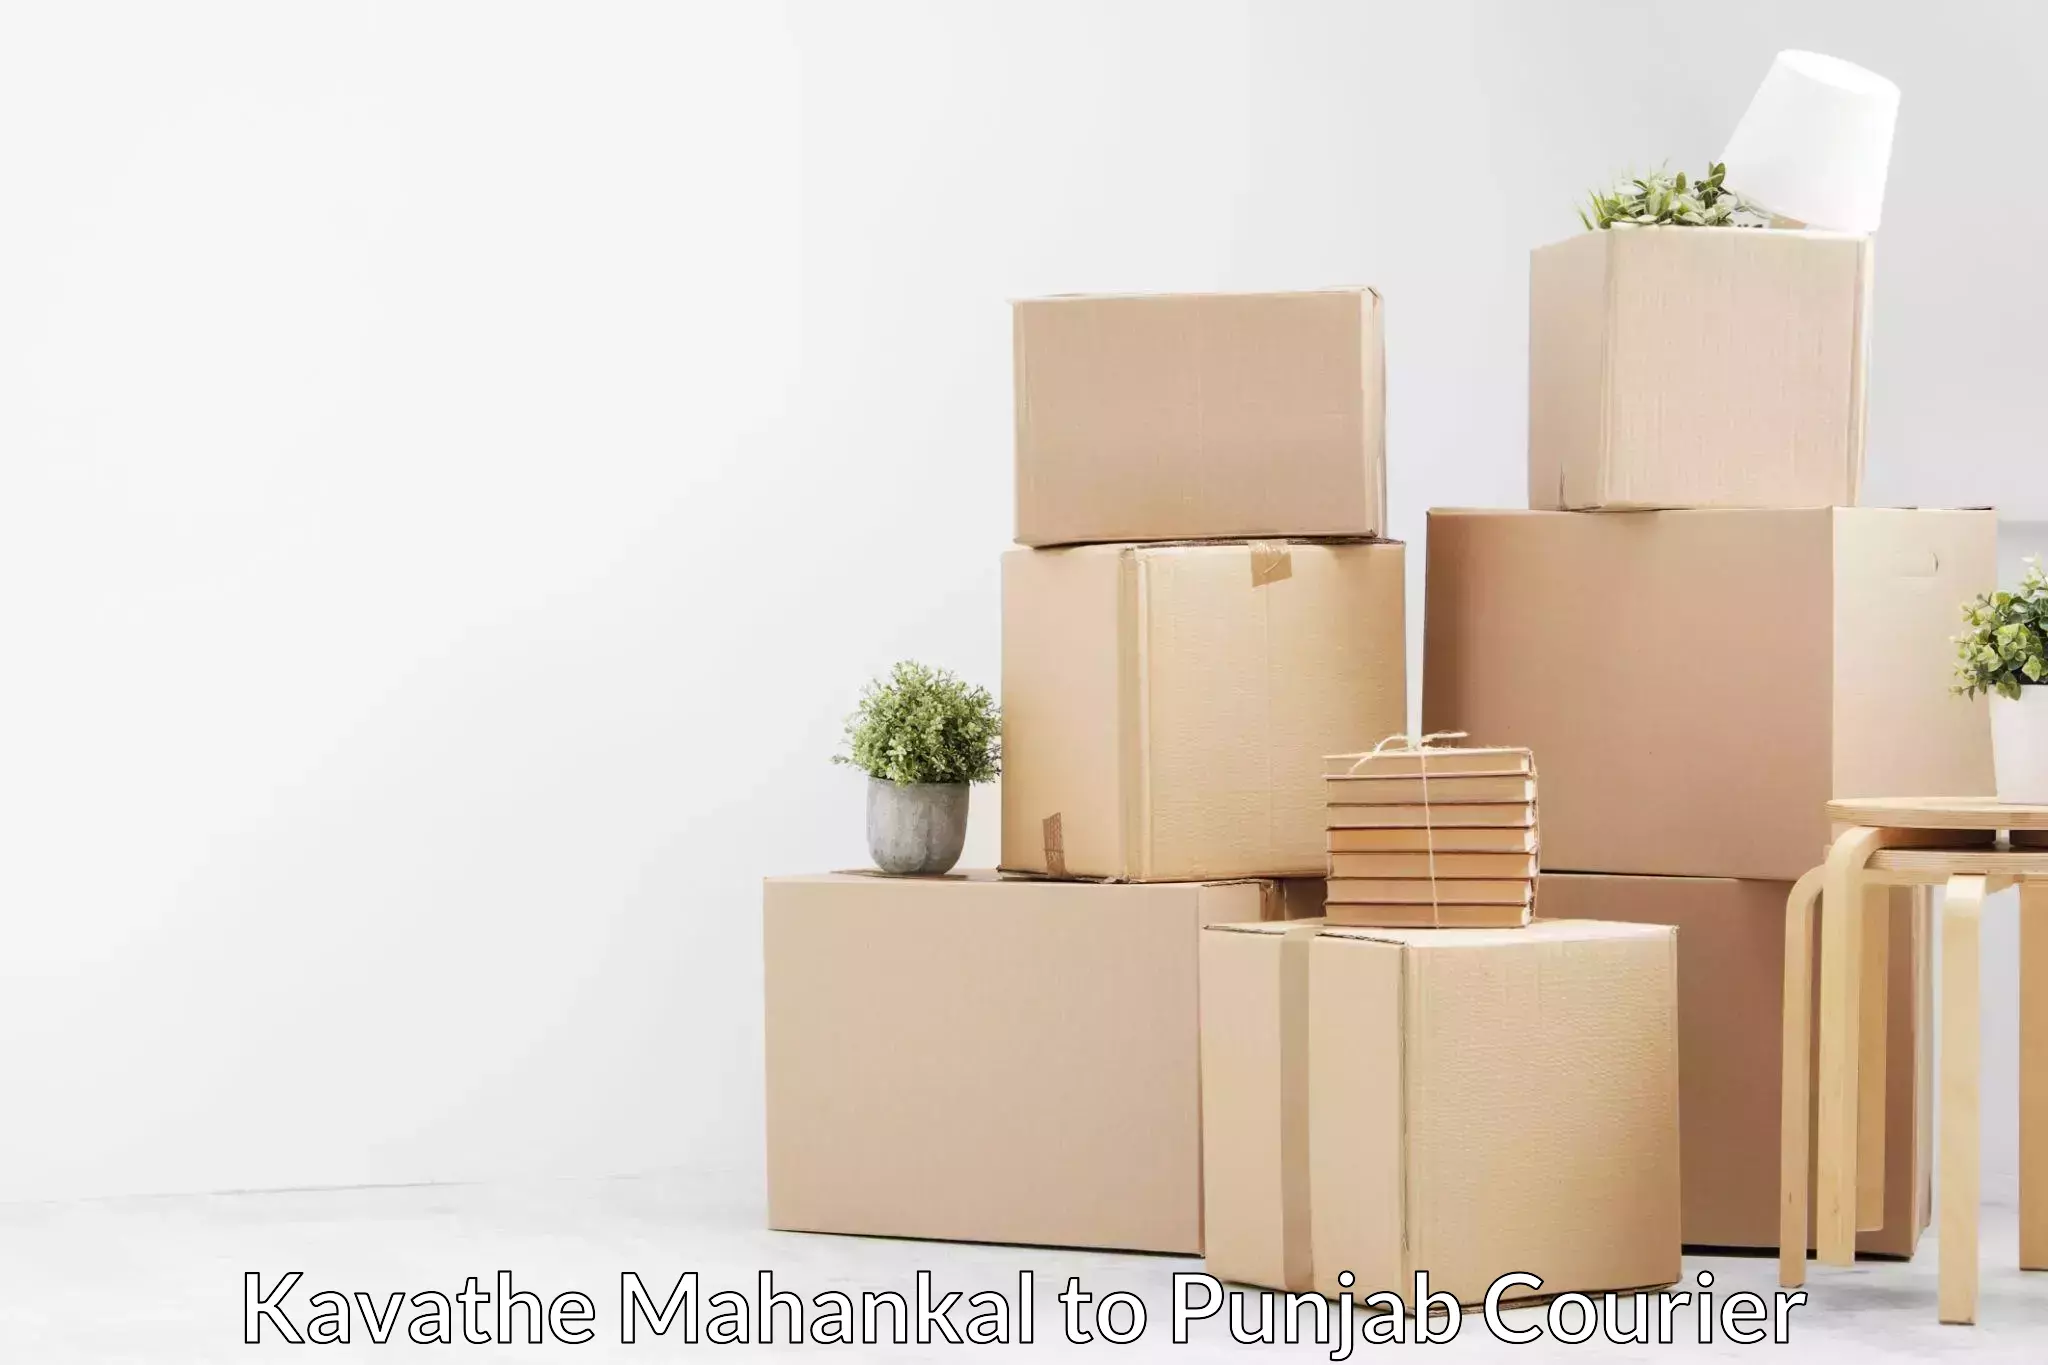 Home goods moving company Kavathe Mahankal to Amritsar